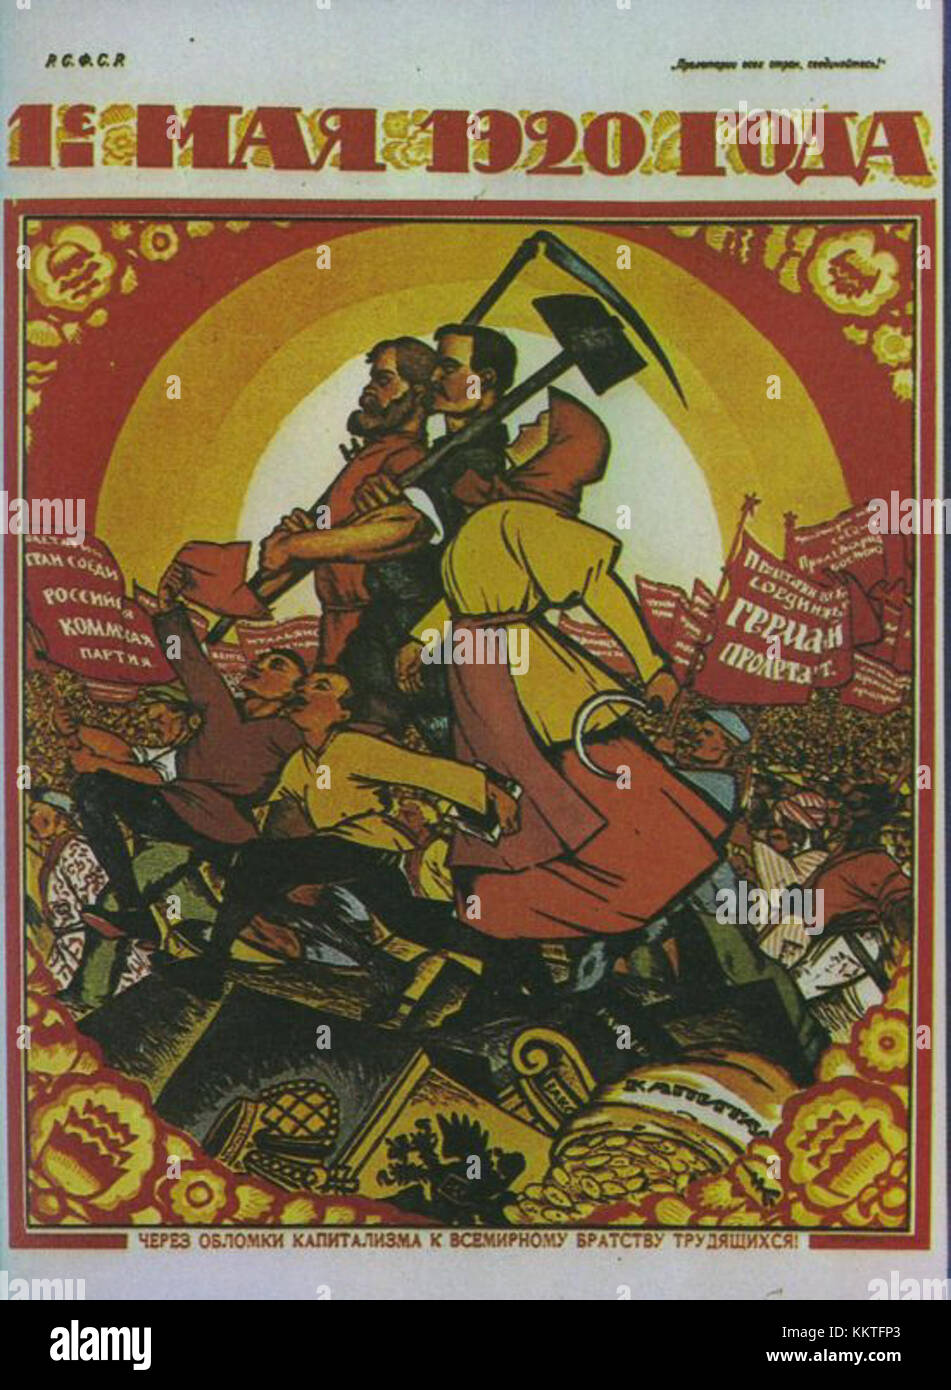 1 Mei poster, Rusland 1920 Stock Photo - Alamy